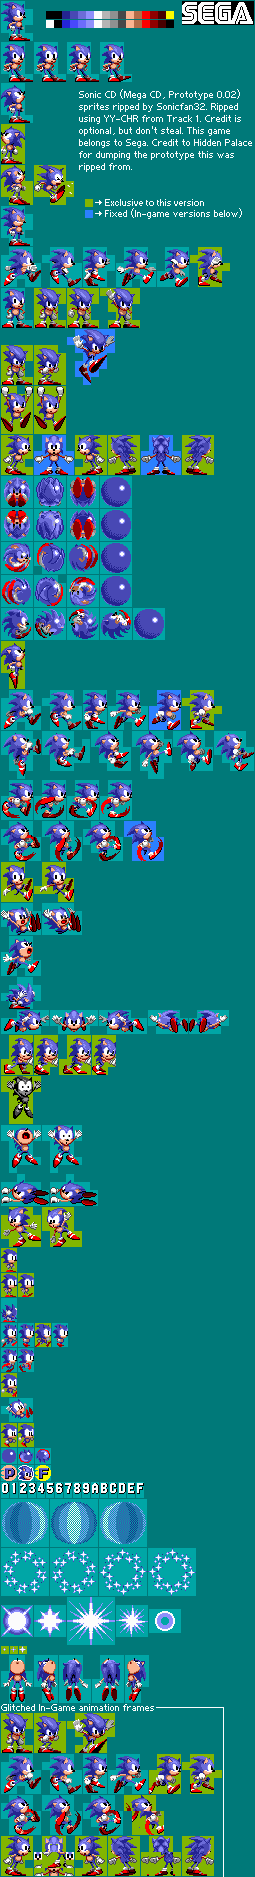 Sonic the Hedgehog CD (Prototype) - Sonic (0.02)